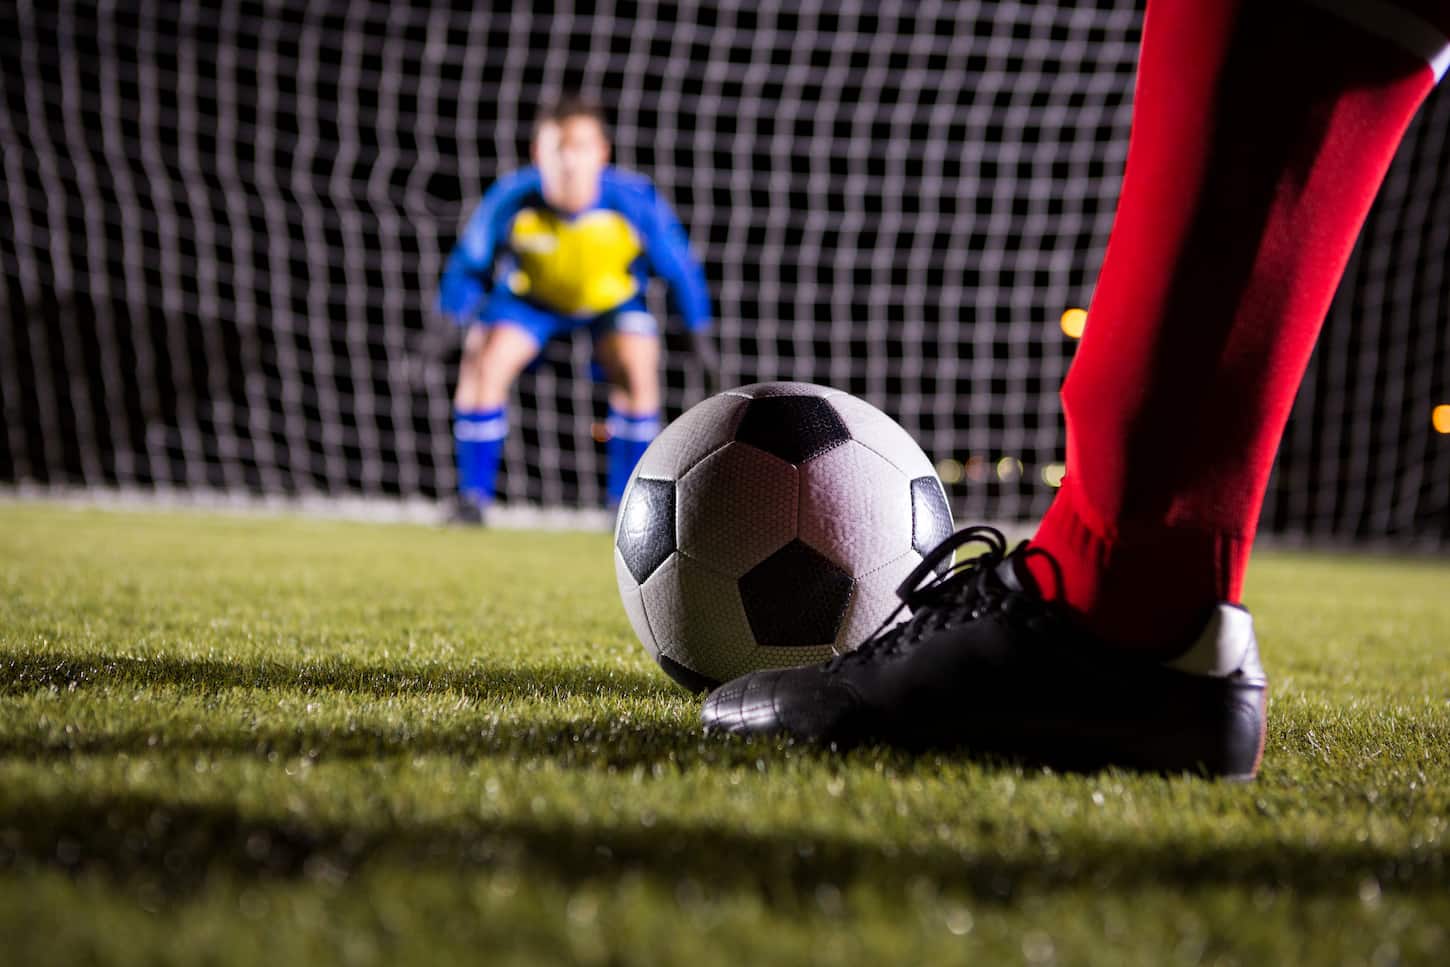 Can A Soccer Goalie Bounce The Ball? (Rules Clarified)